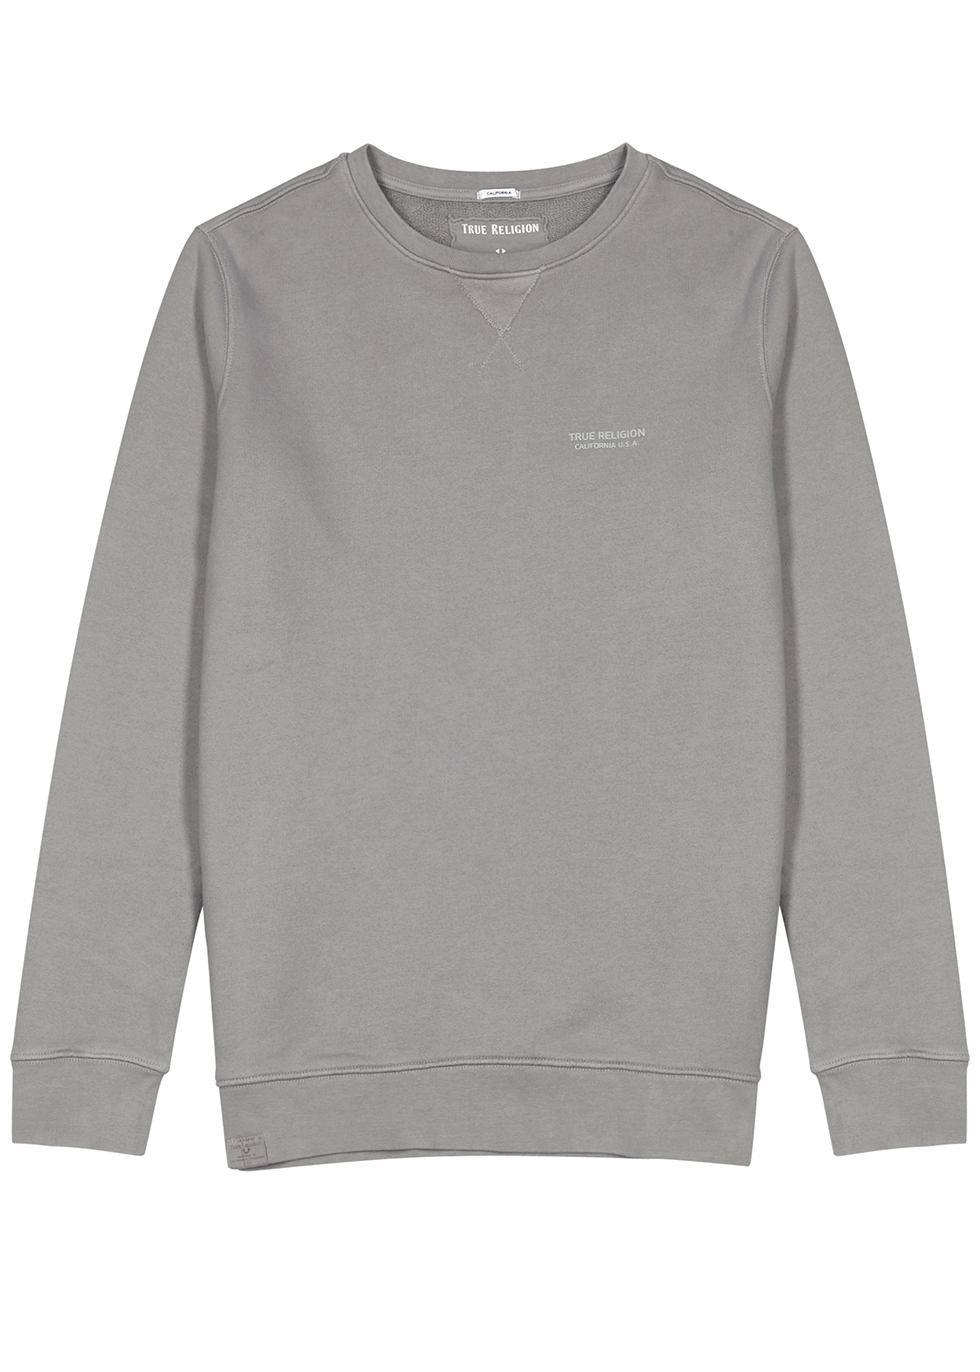 grey true religion sweater